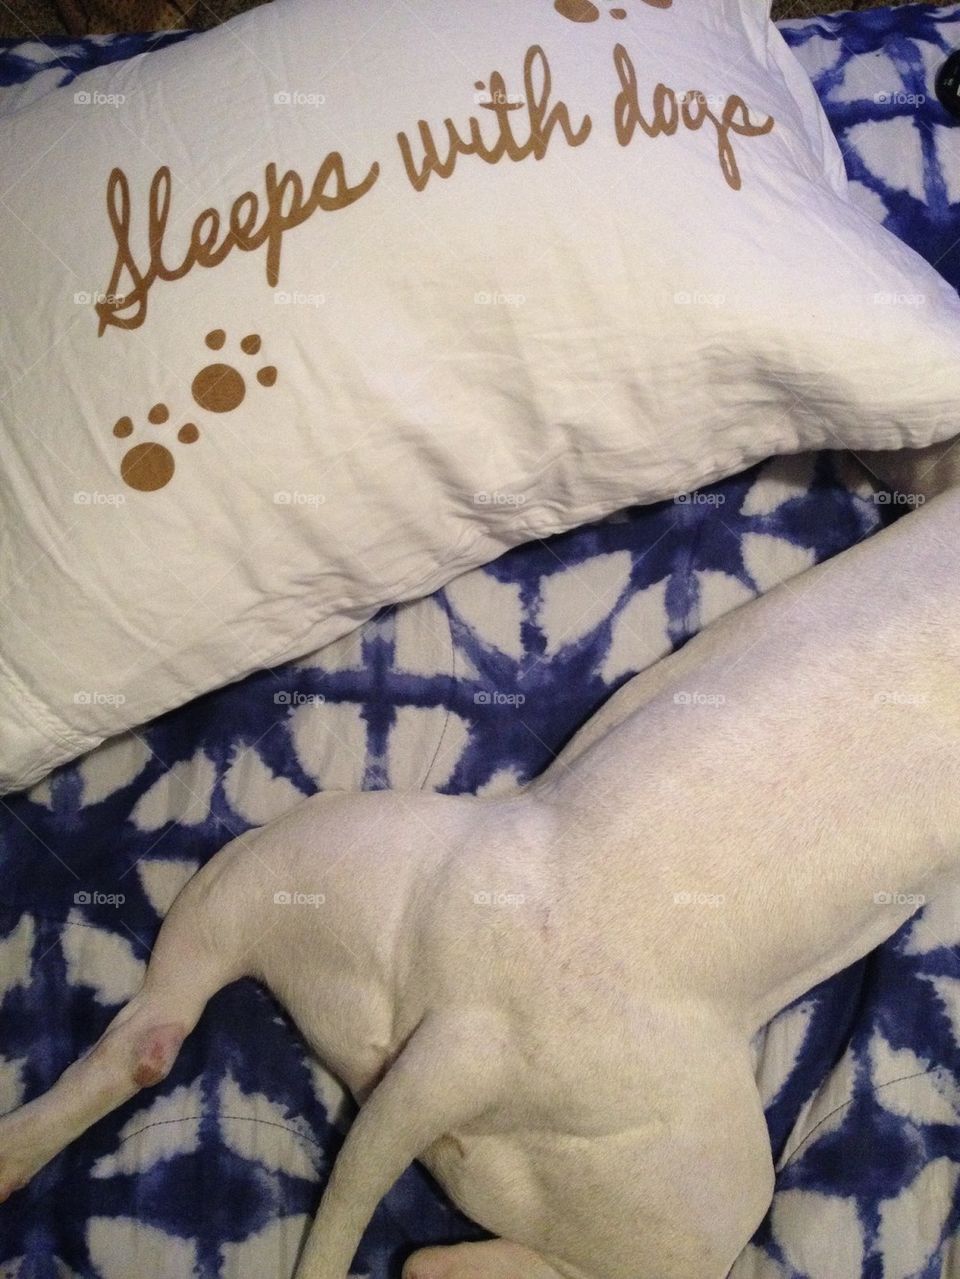 Sleeps with Dogs